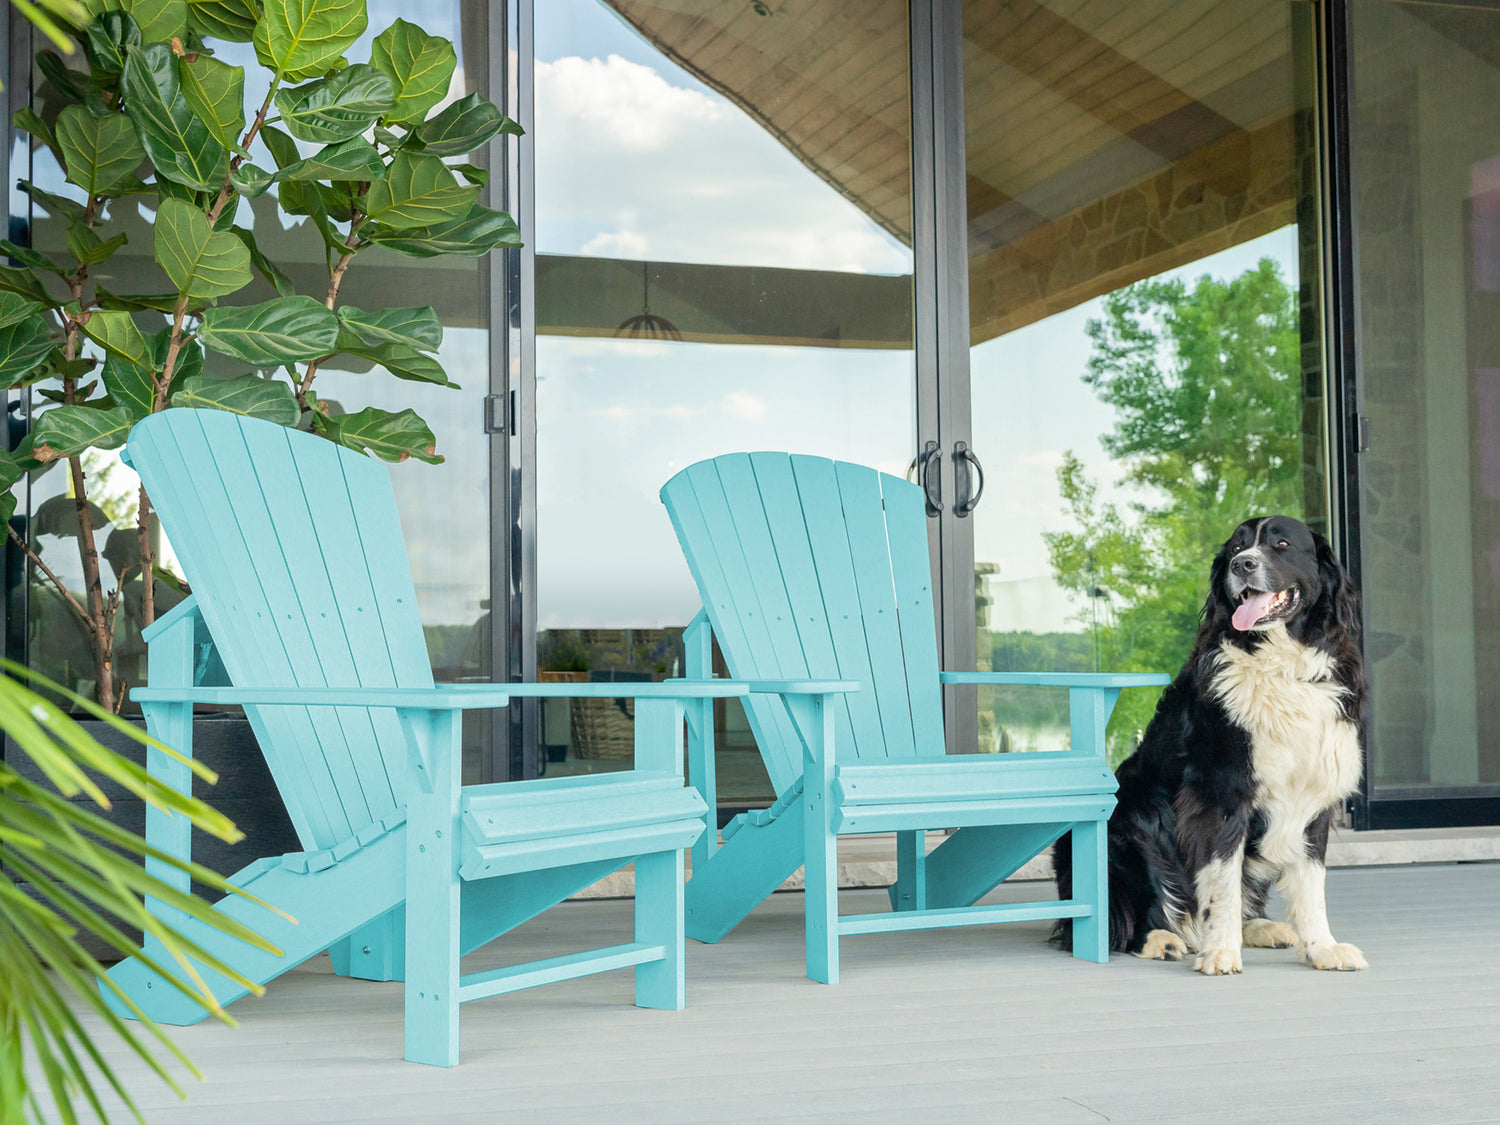 aqua Adirondack chairs on patio with dog